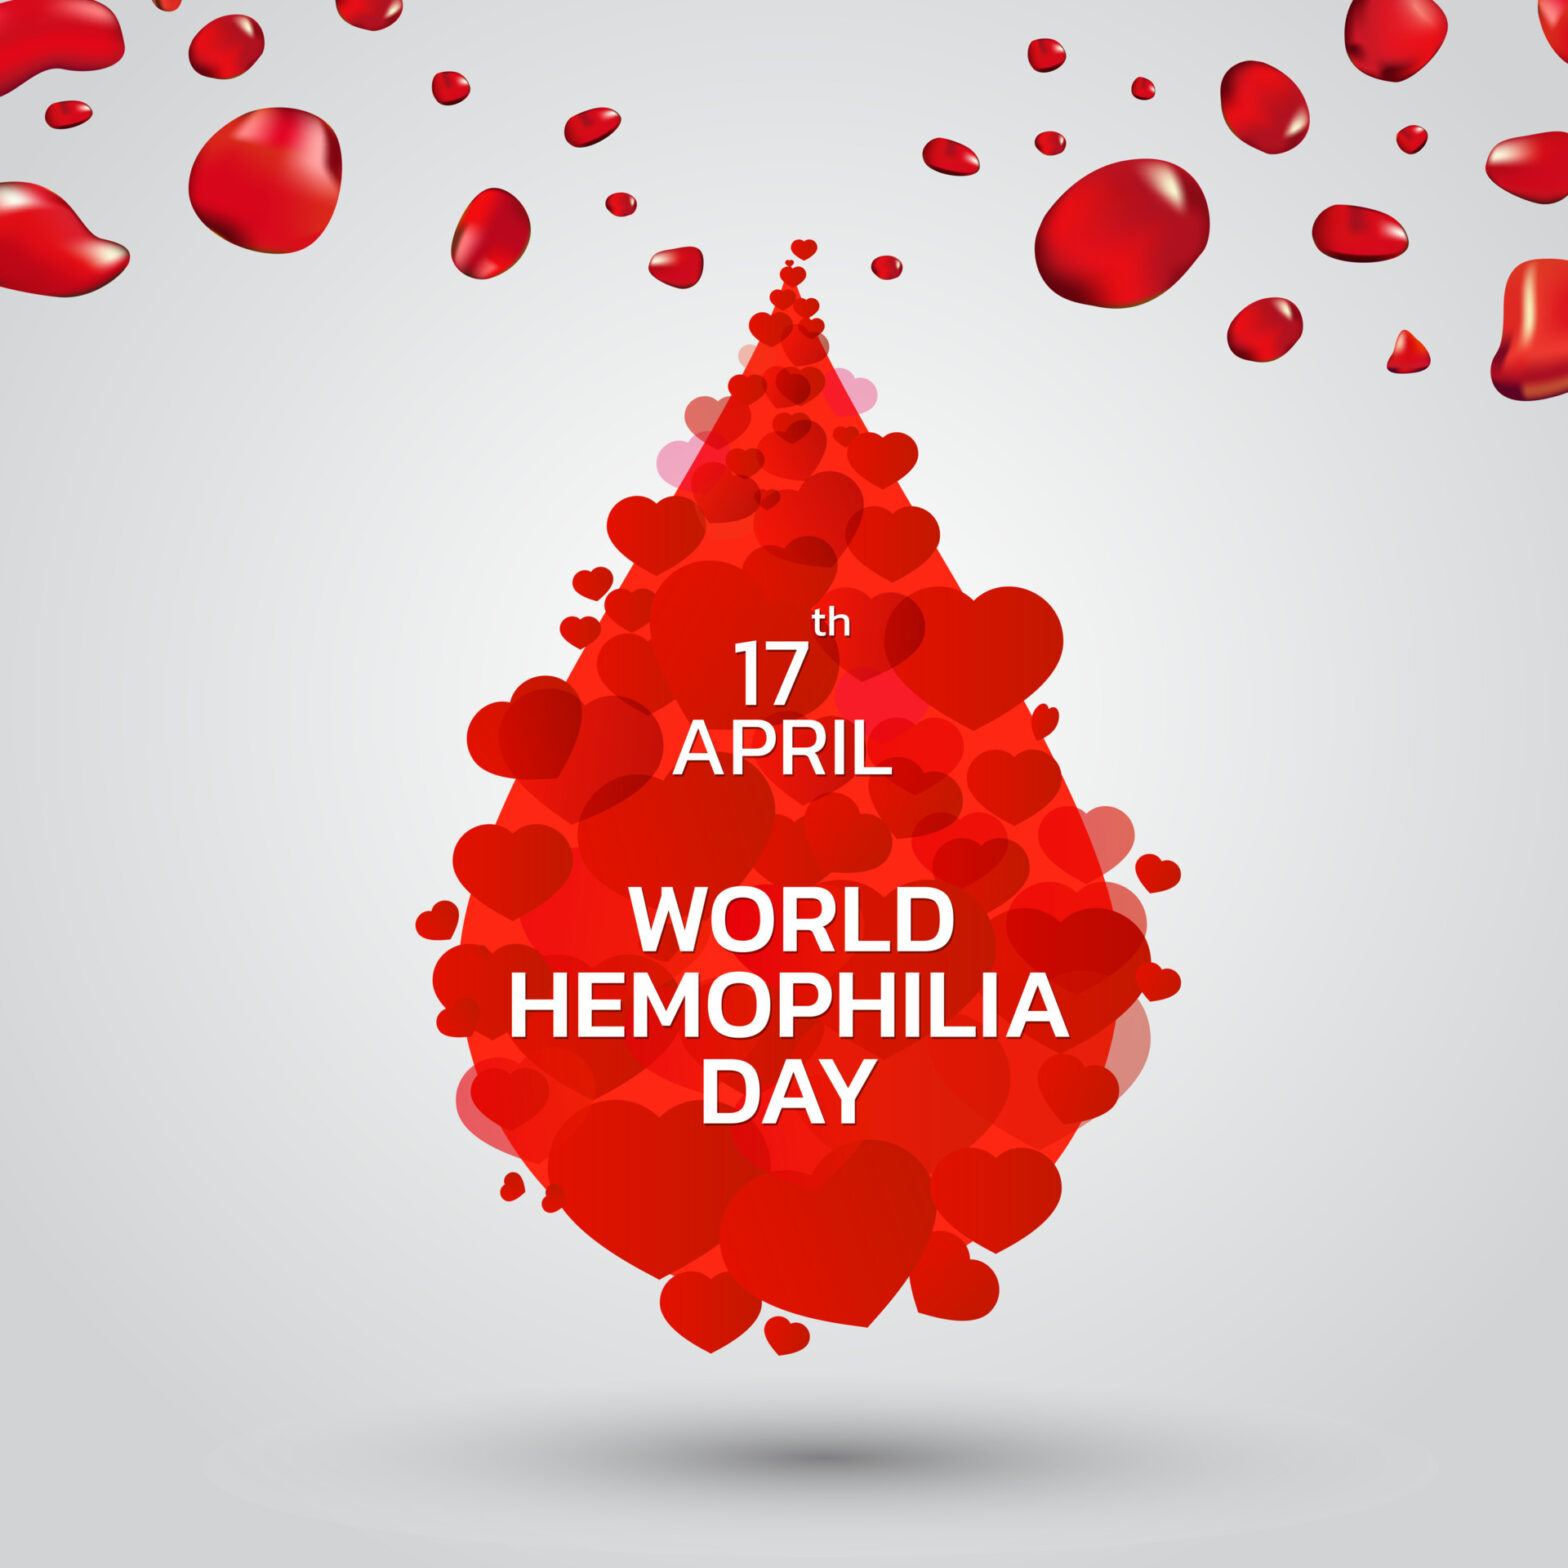 World Hemophilia Day observed